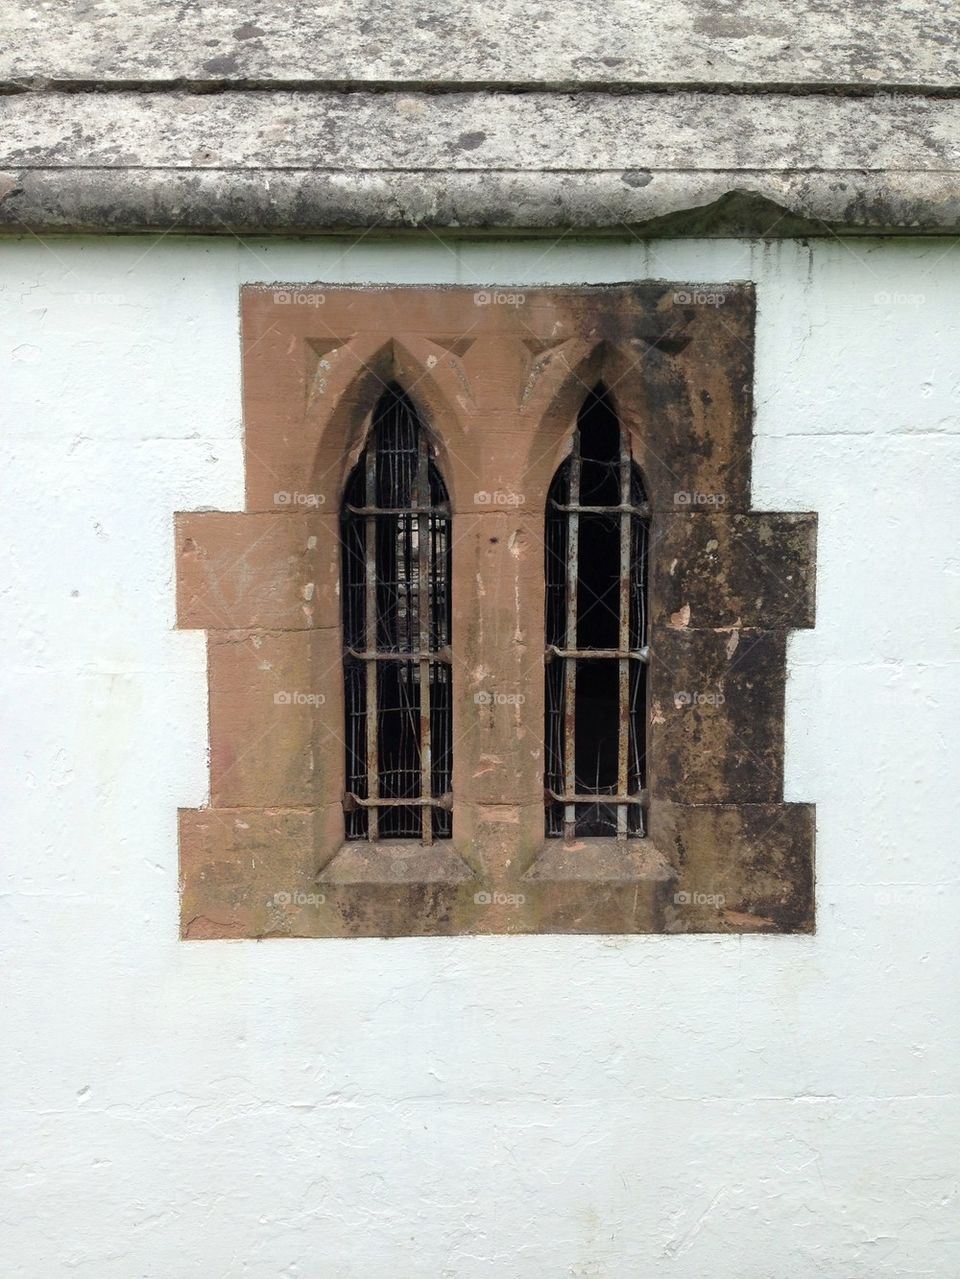 Windows on Moslem, church style windows